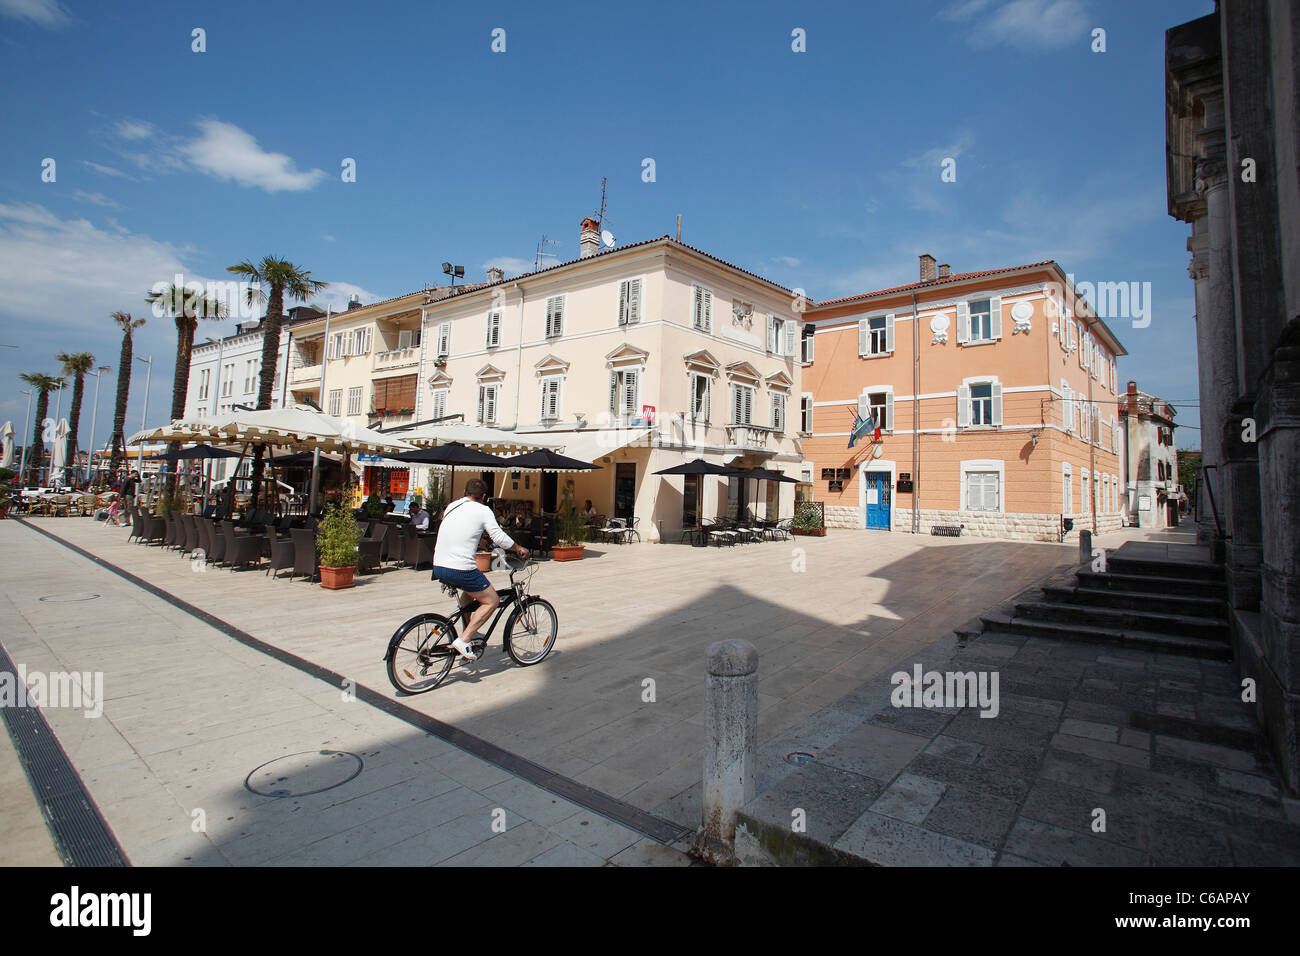 Cyclist in the Piazza Slobode Liberta in Umag,Croatia. Stock Photo